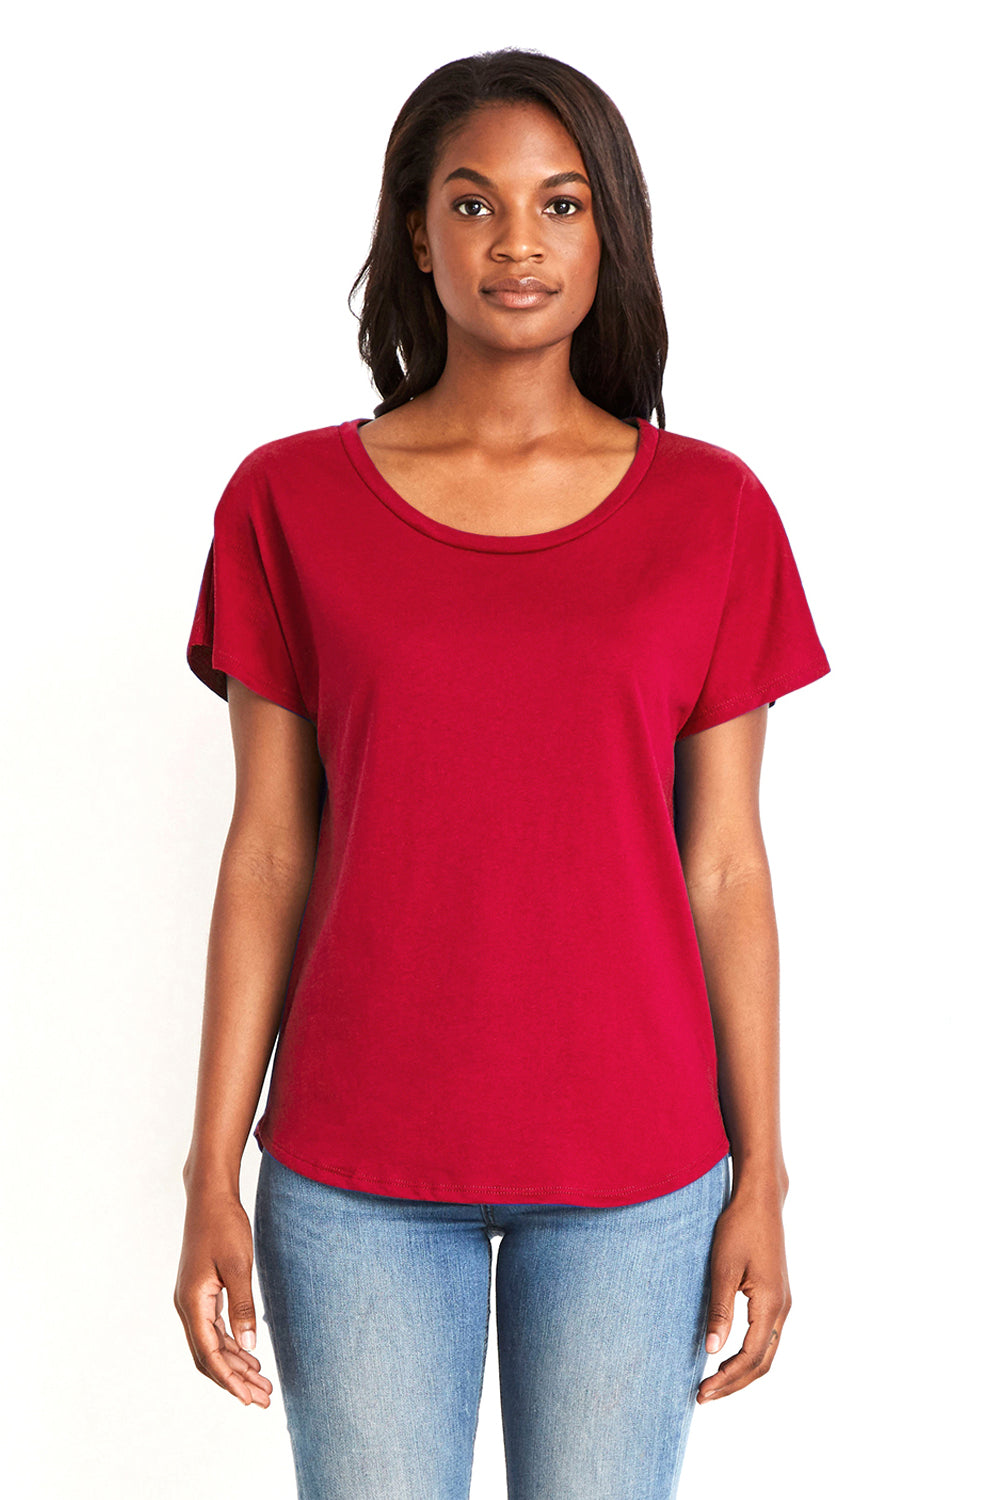 Next Level 1560 Womens Ideal Dolman Short Sleeve Crewneck T-Shirt Red Front